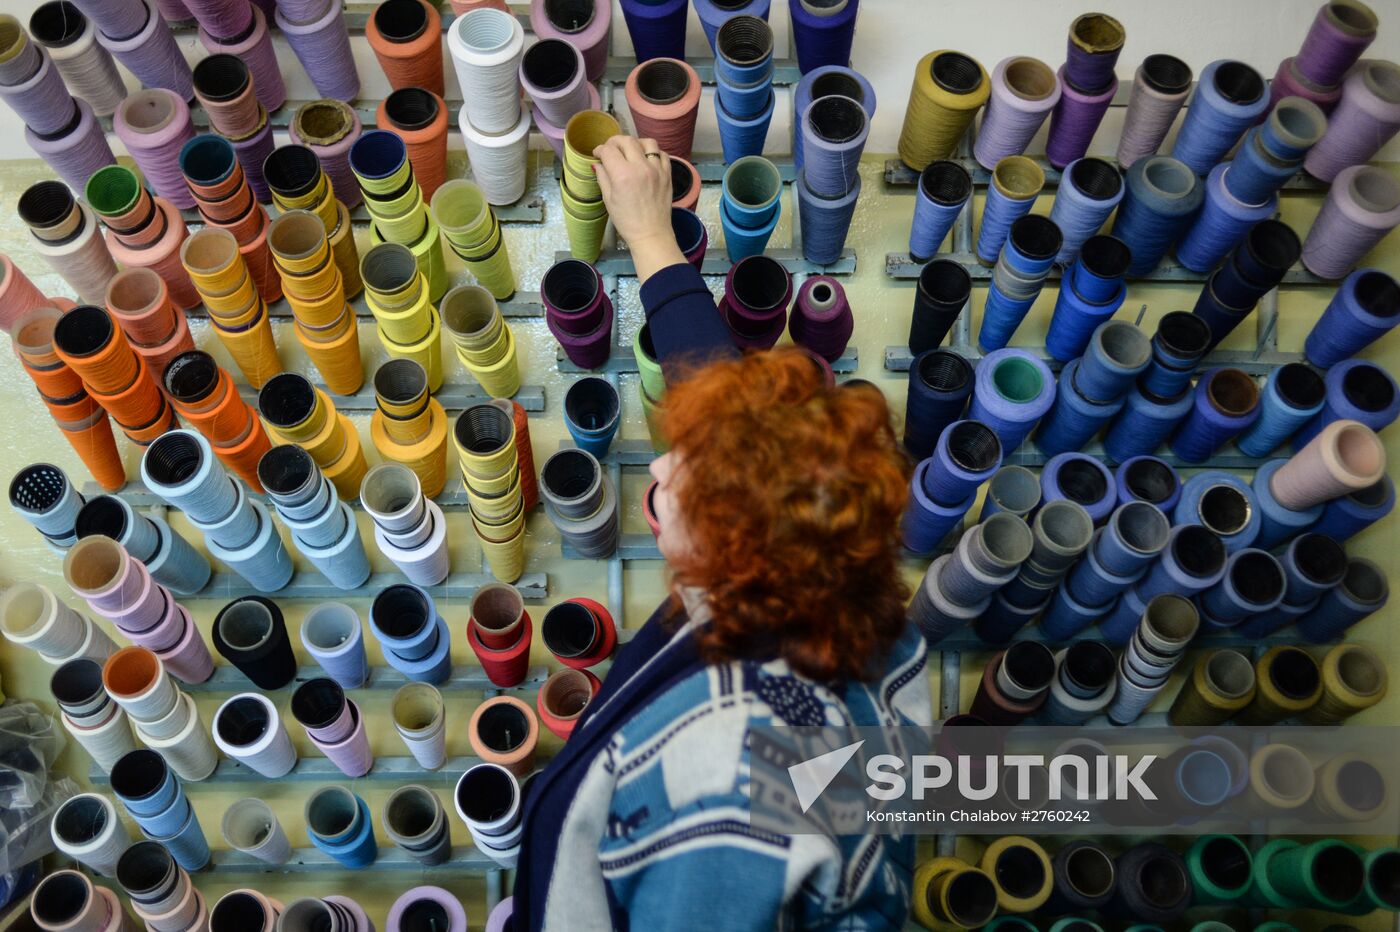 Velikiye Luki Knitting Factory Trivel has been awarded Russian Quality Mark